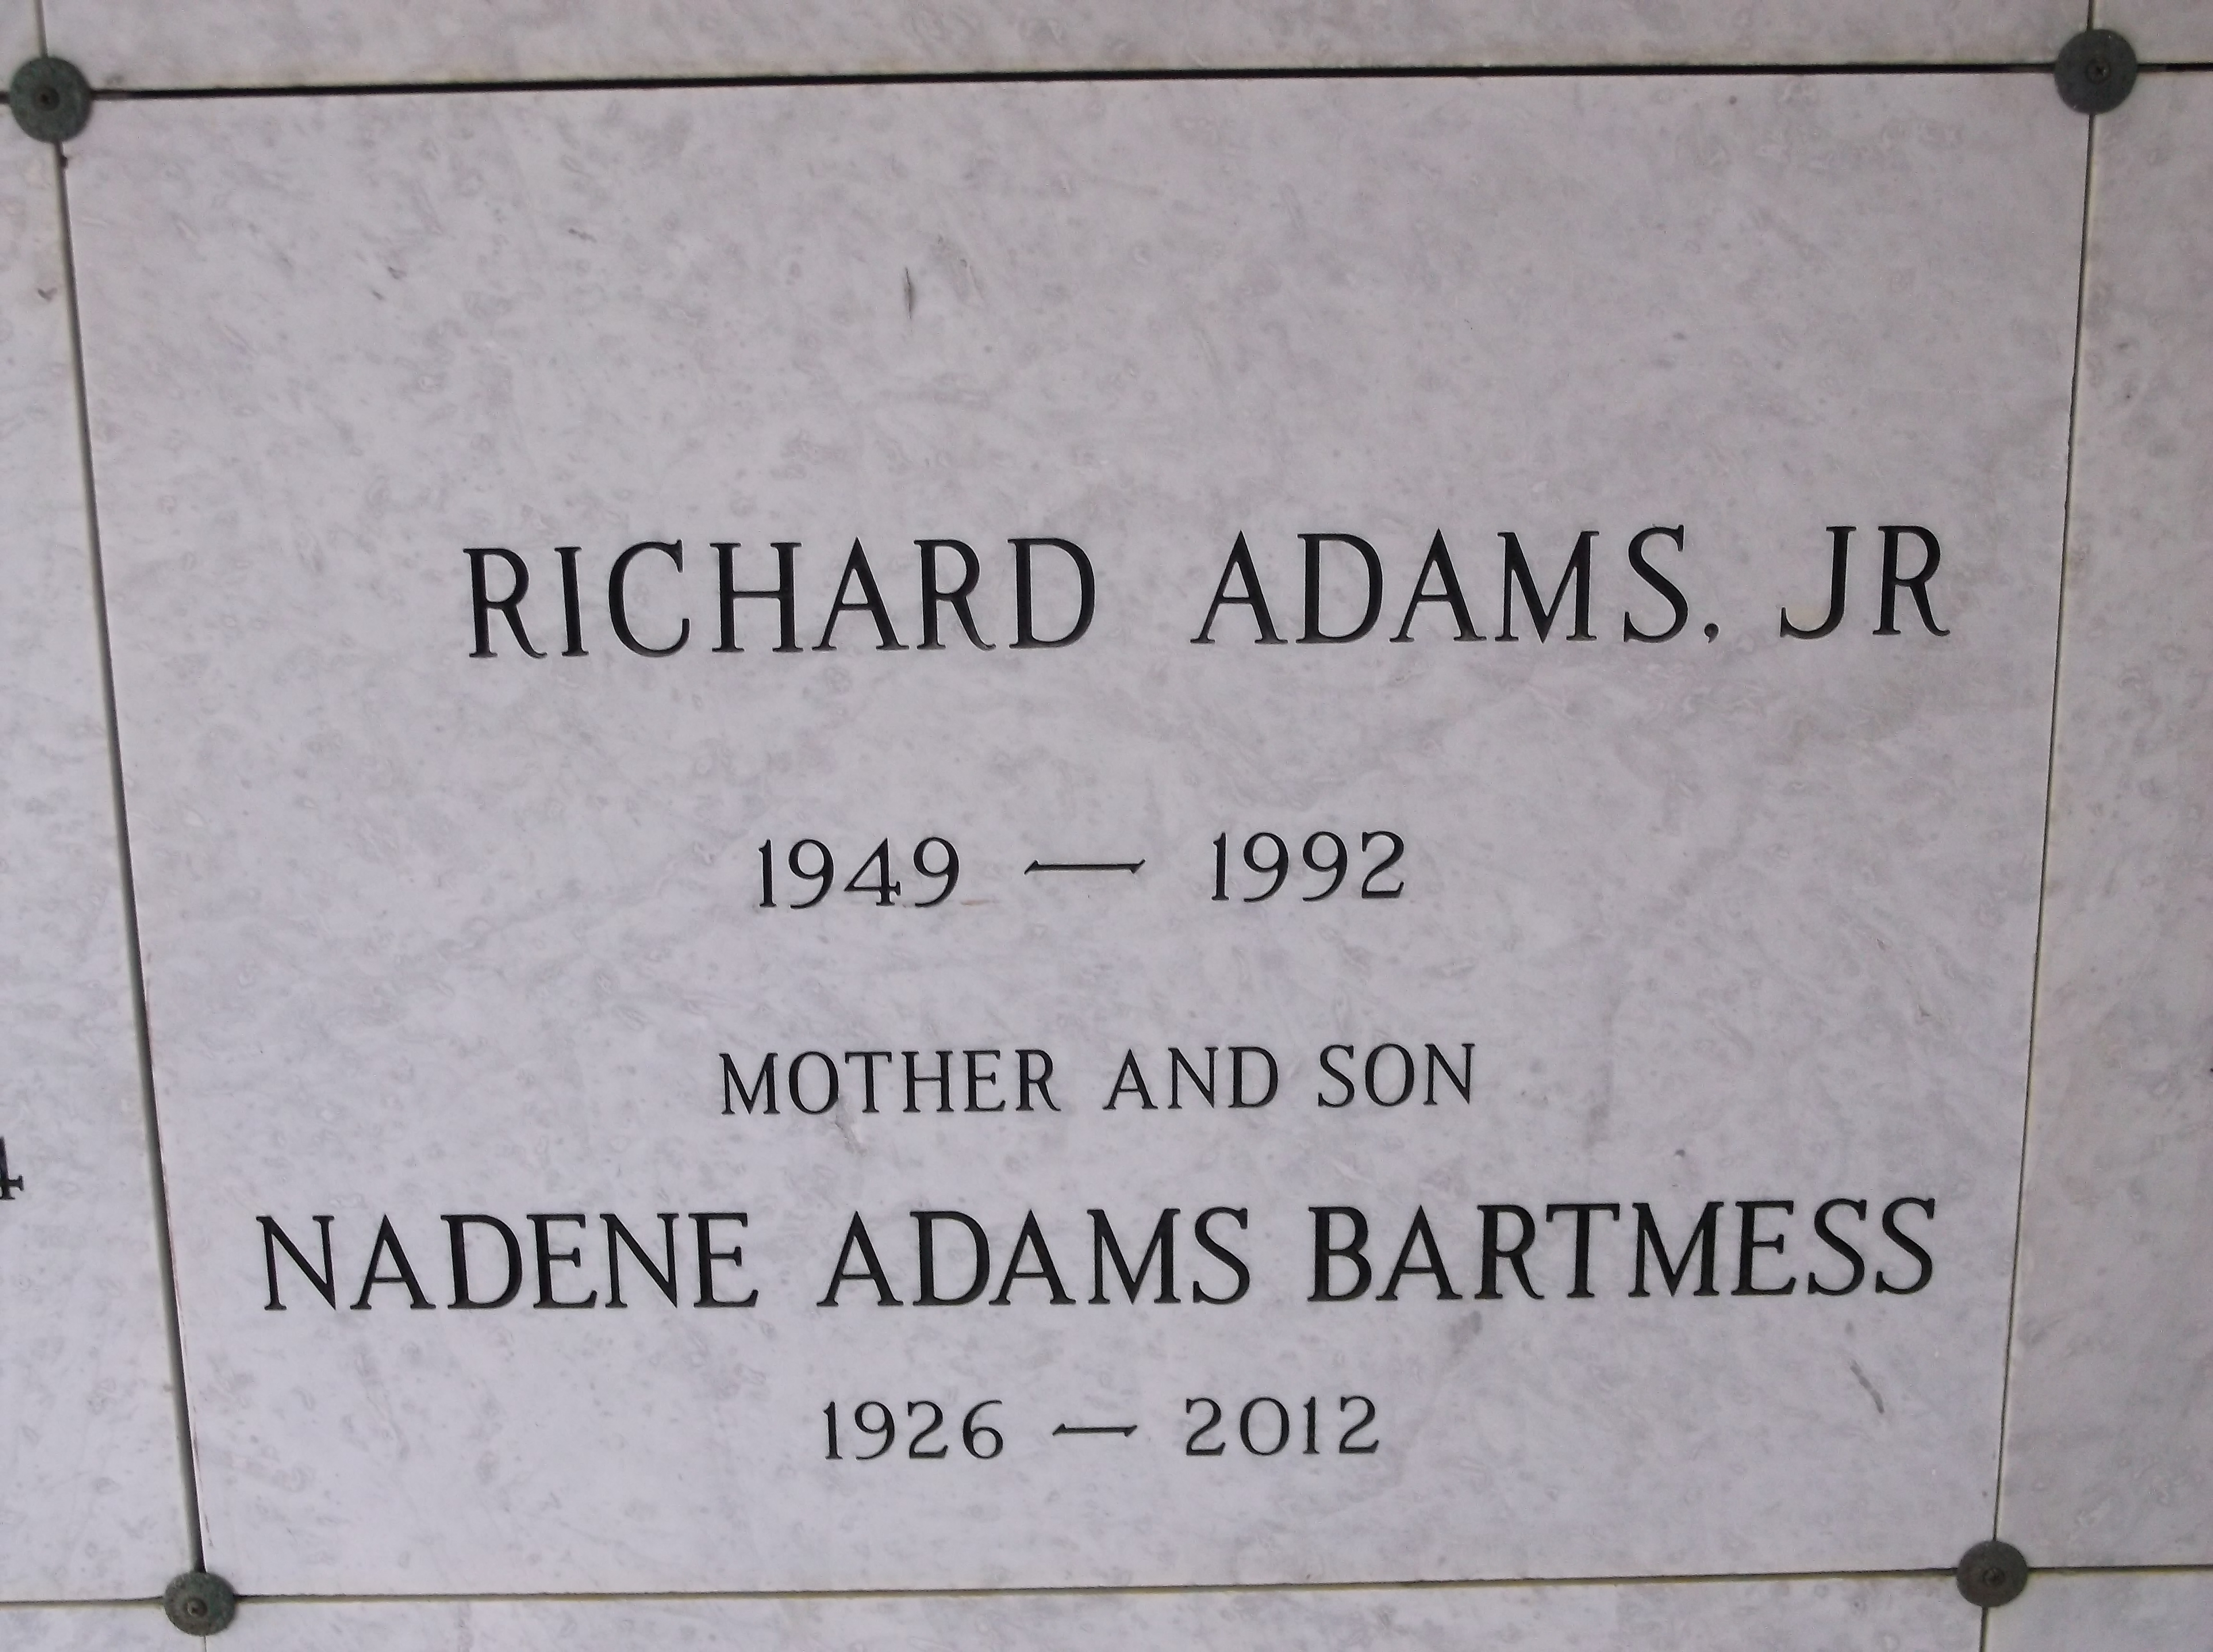 Richard Adams, Jr